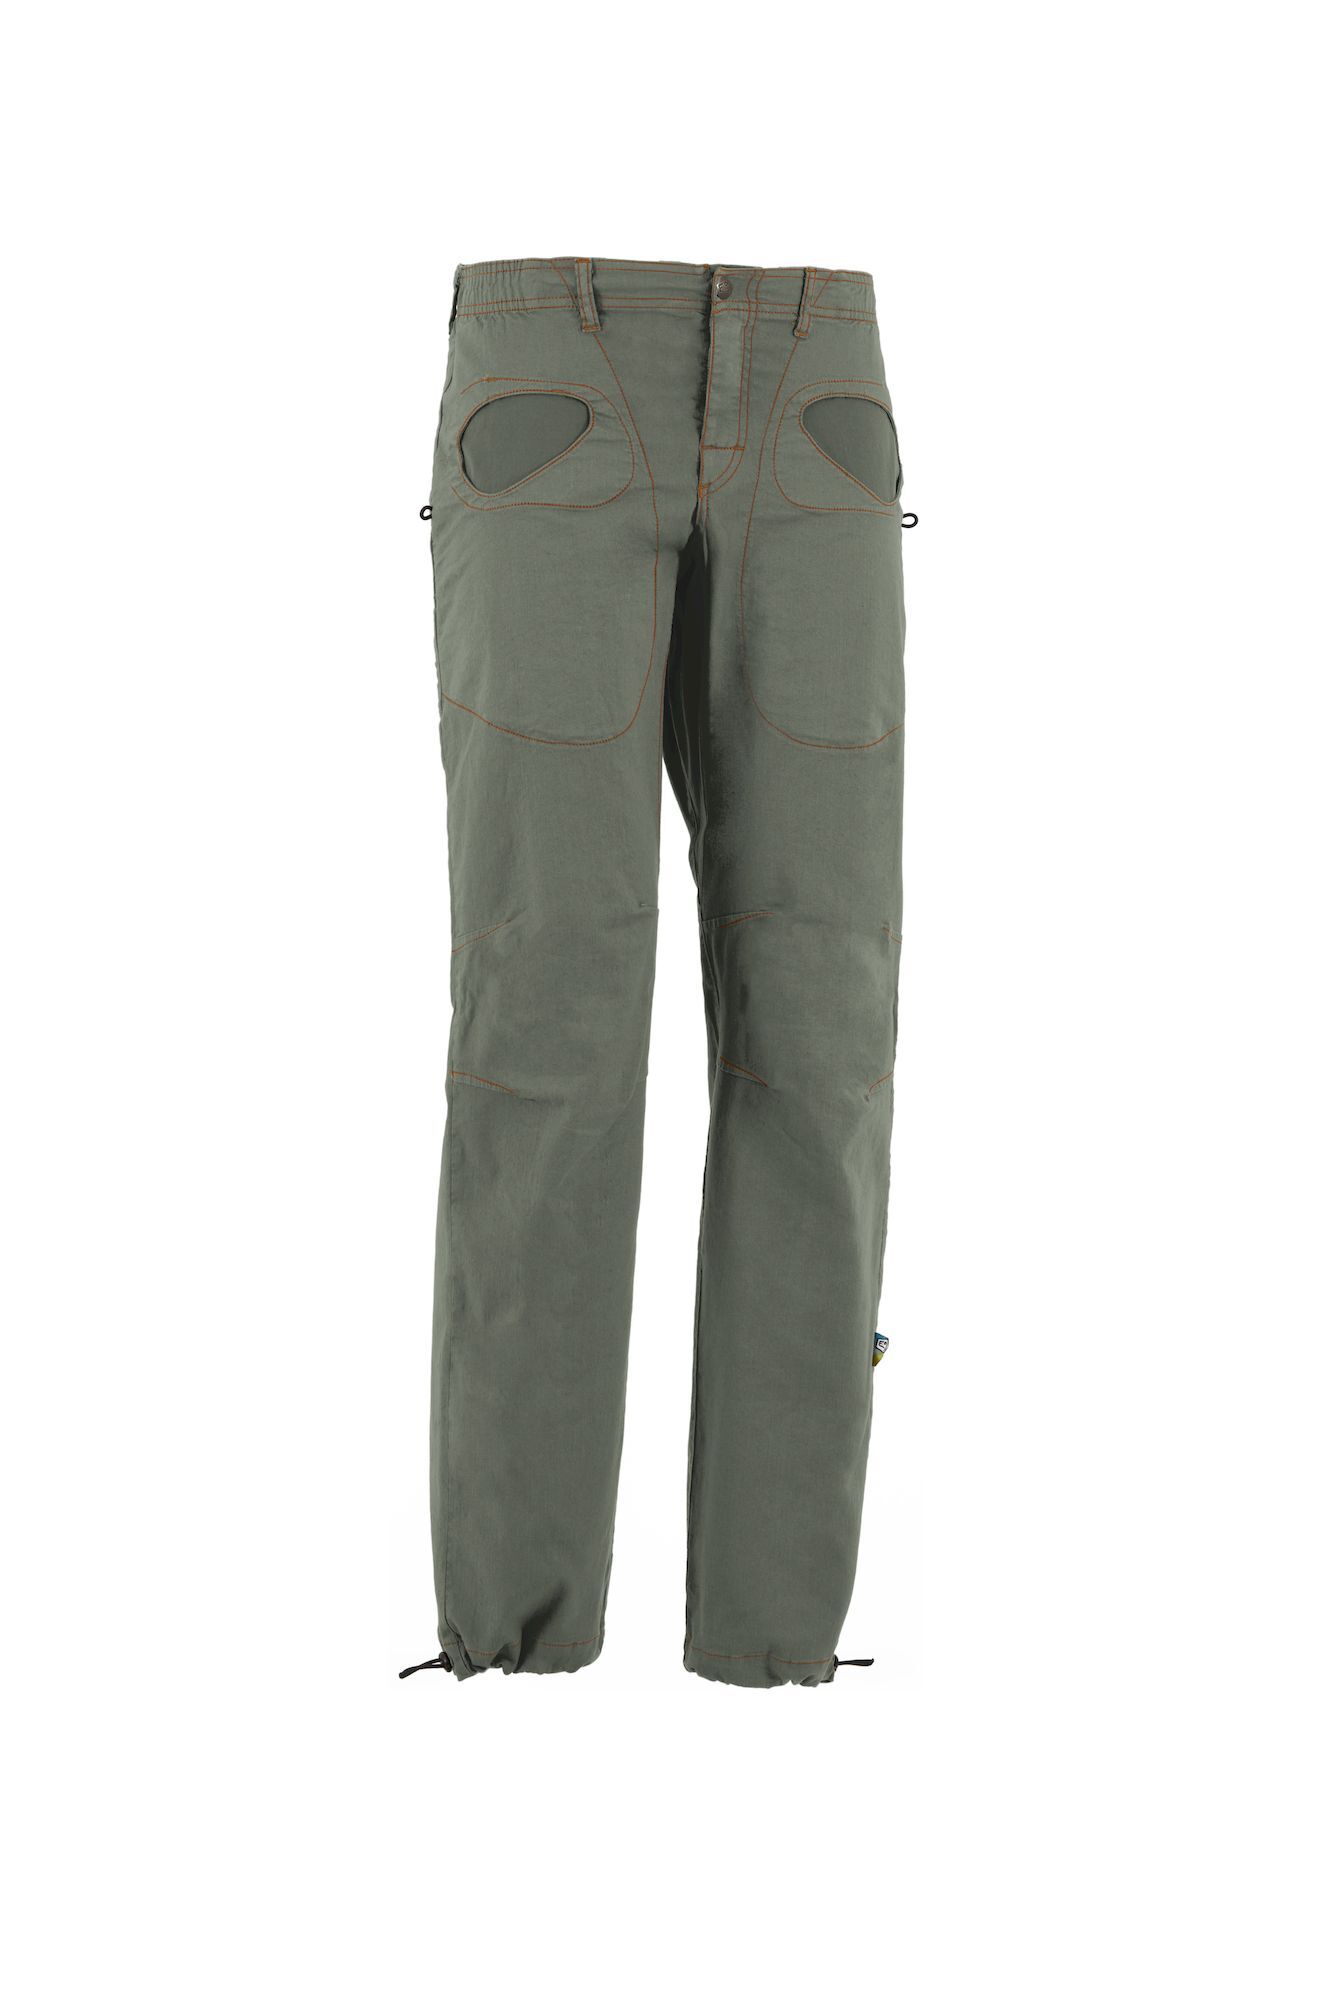 E9 Rondo Flax 2 - Climbing trousers - Men's